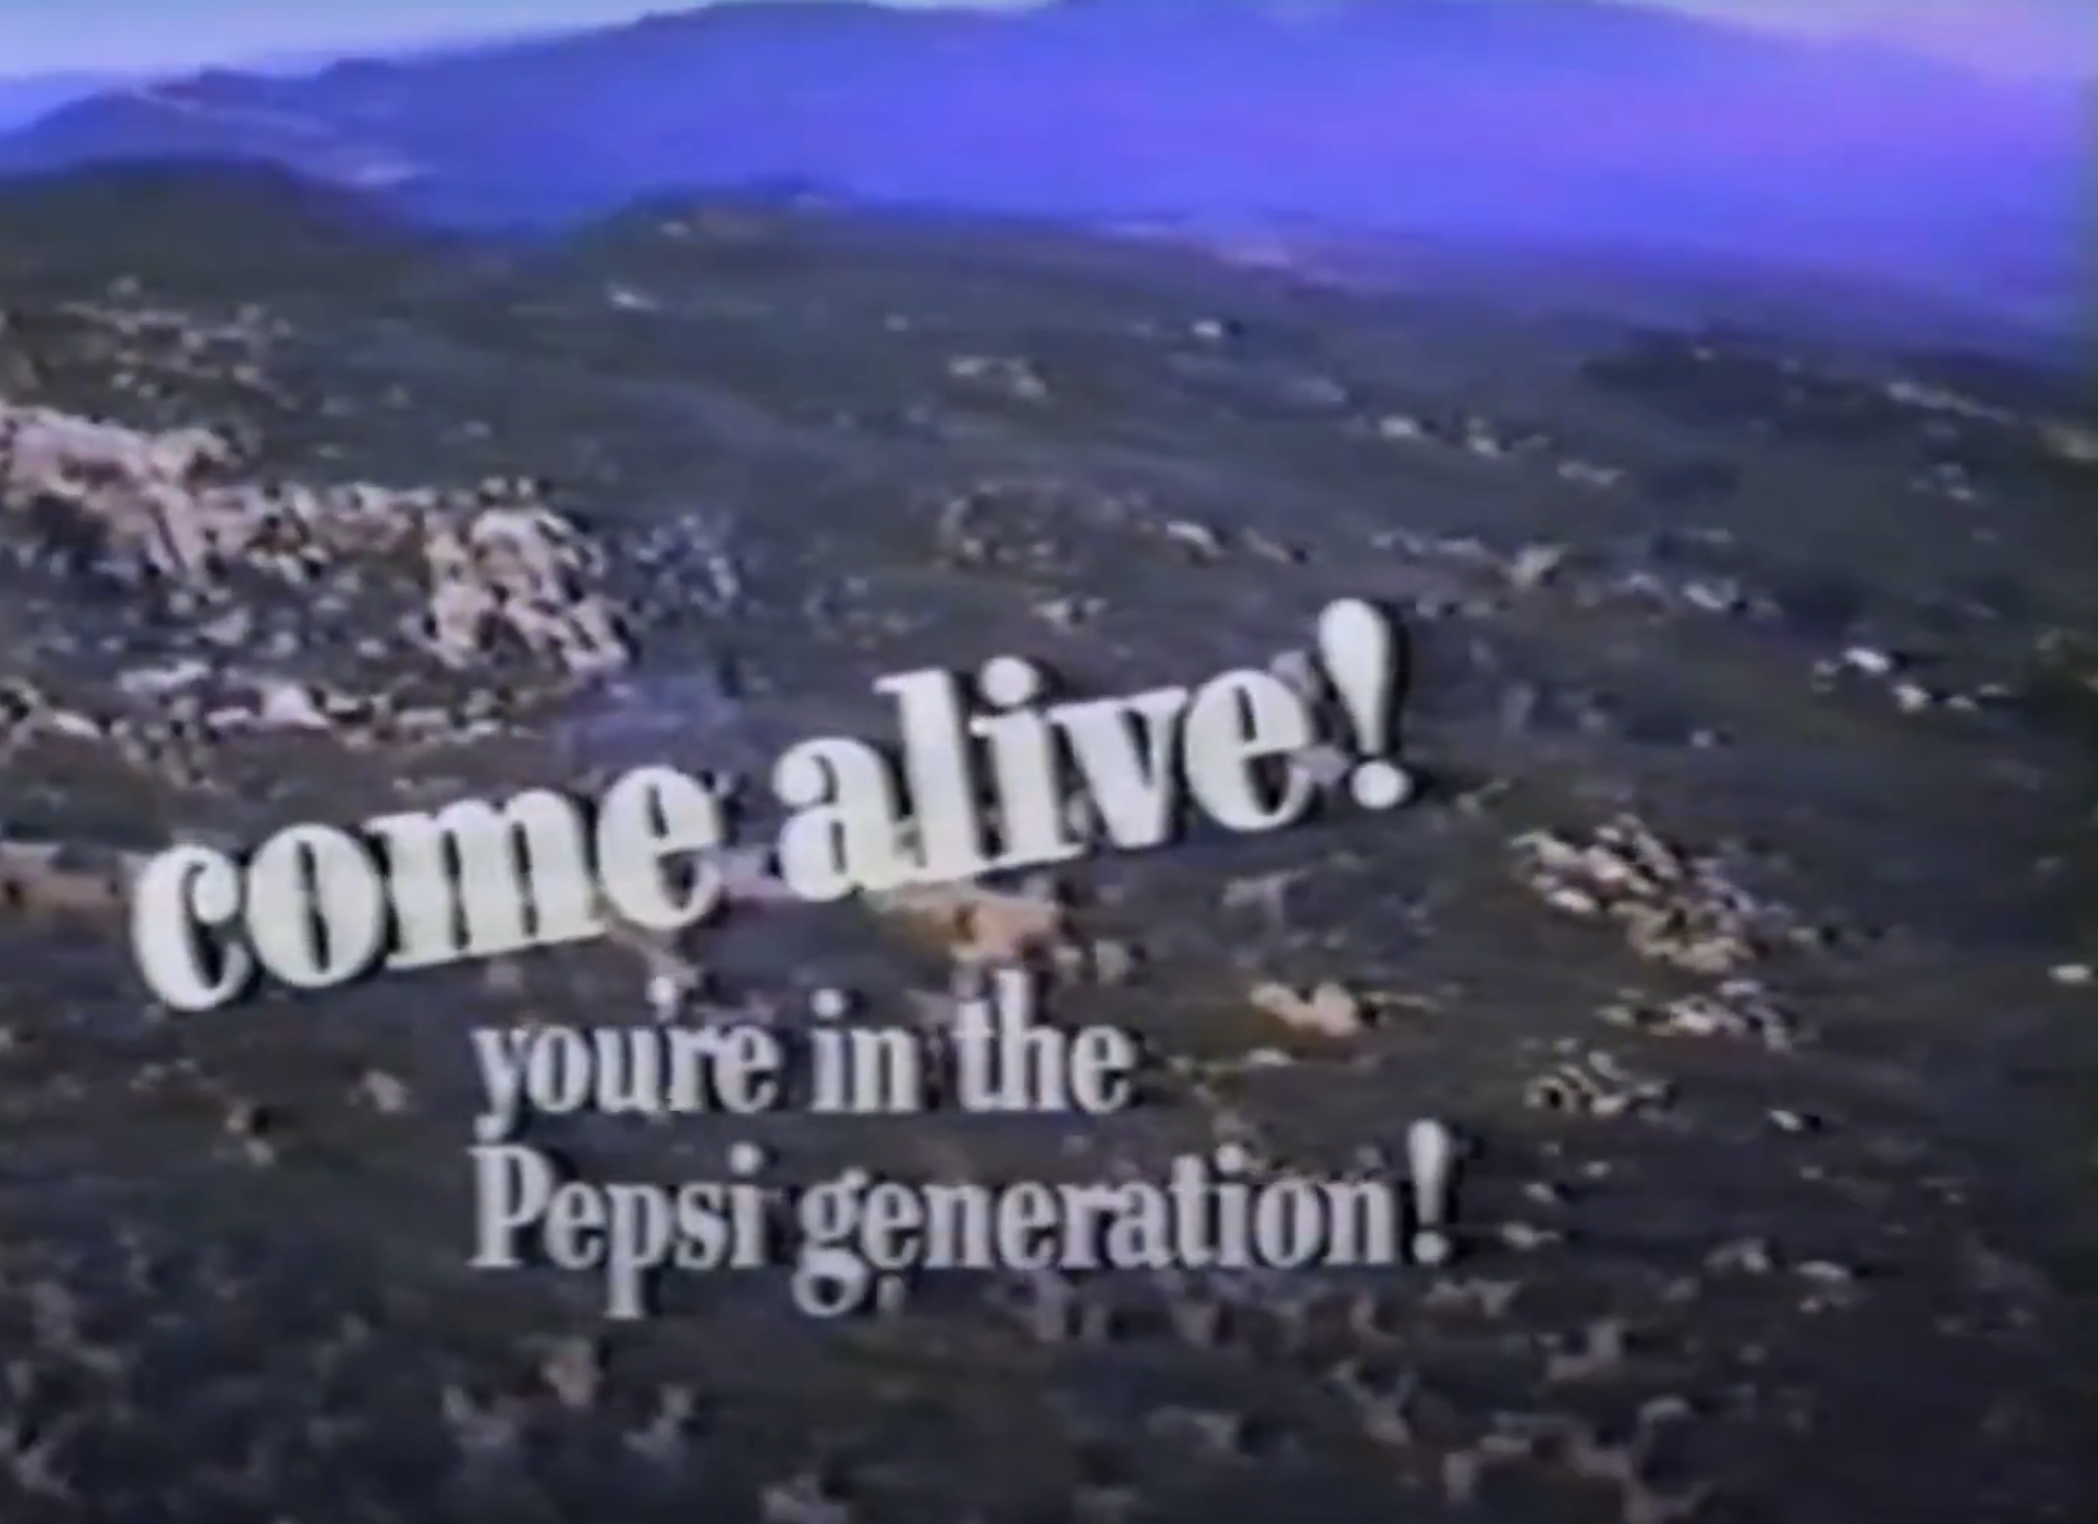 &quot;Come alive! You&#x27;re the Pepsi generation!&quot;